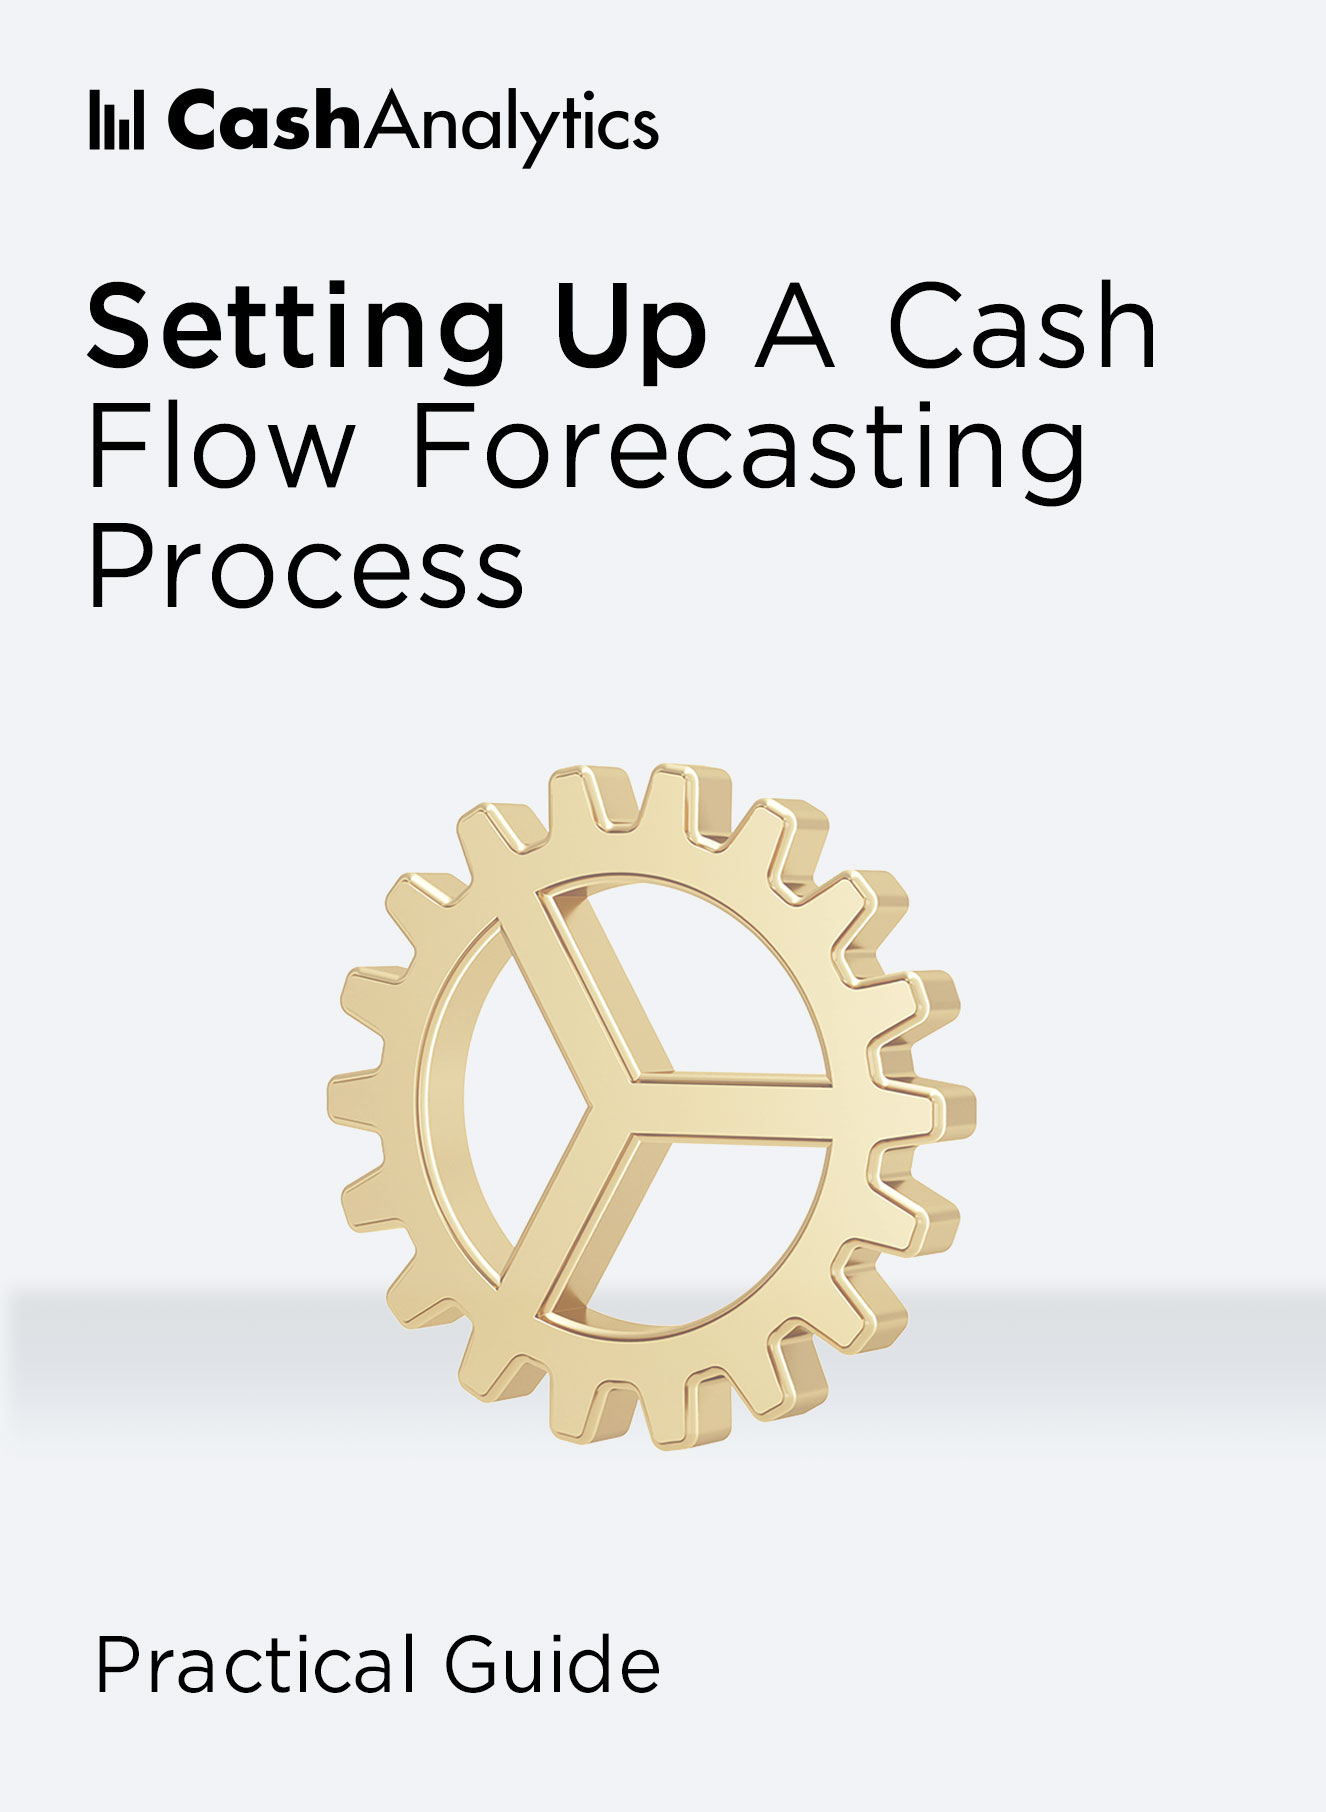 cashflow forecast software